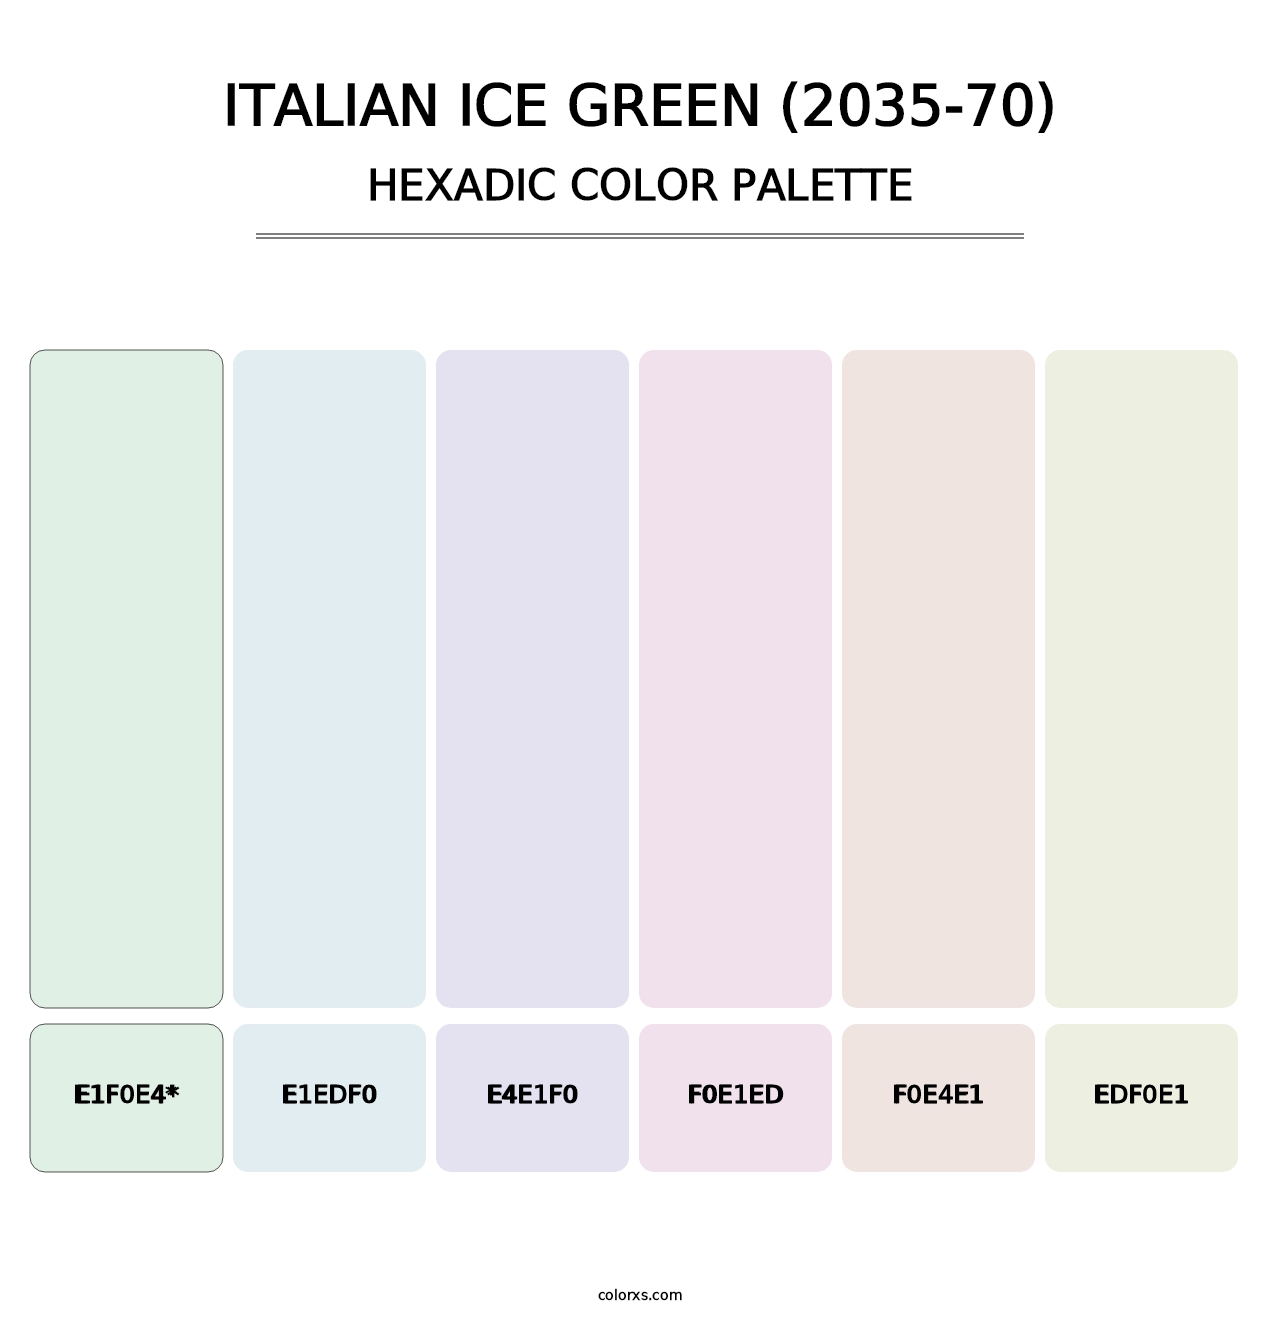 Italian Ice Green (2035-70) - Hexadic Color Palette